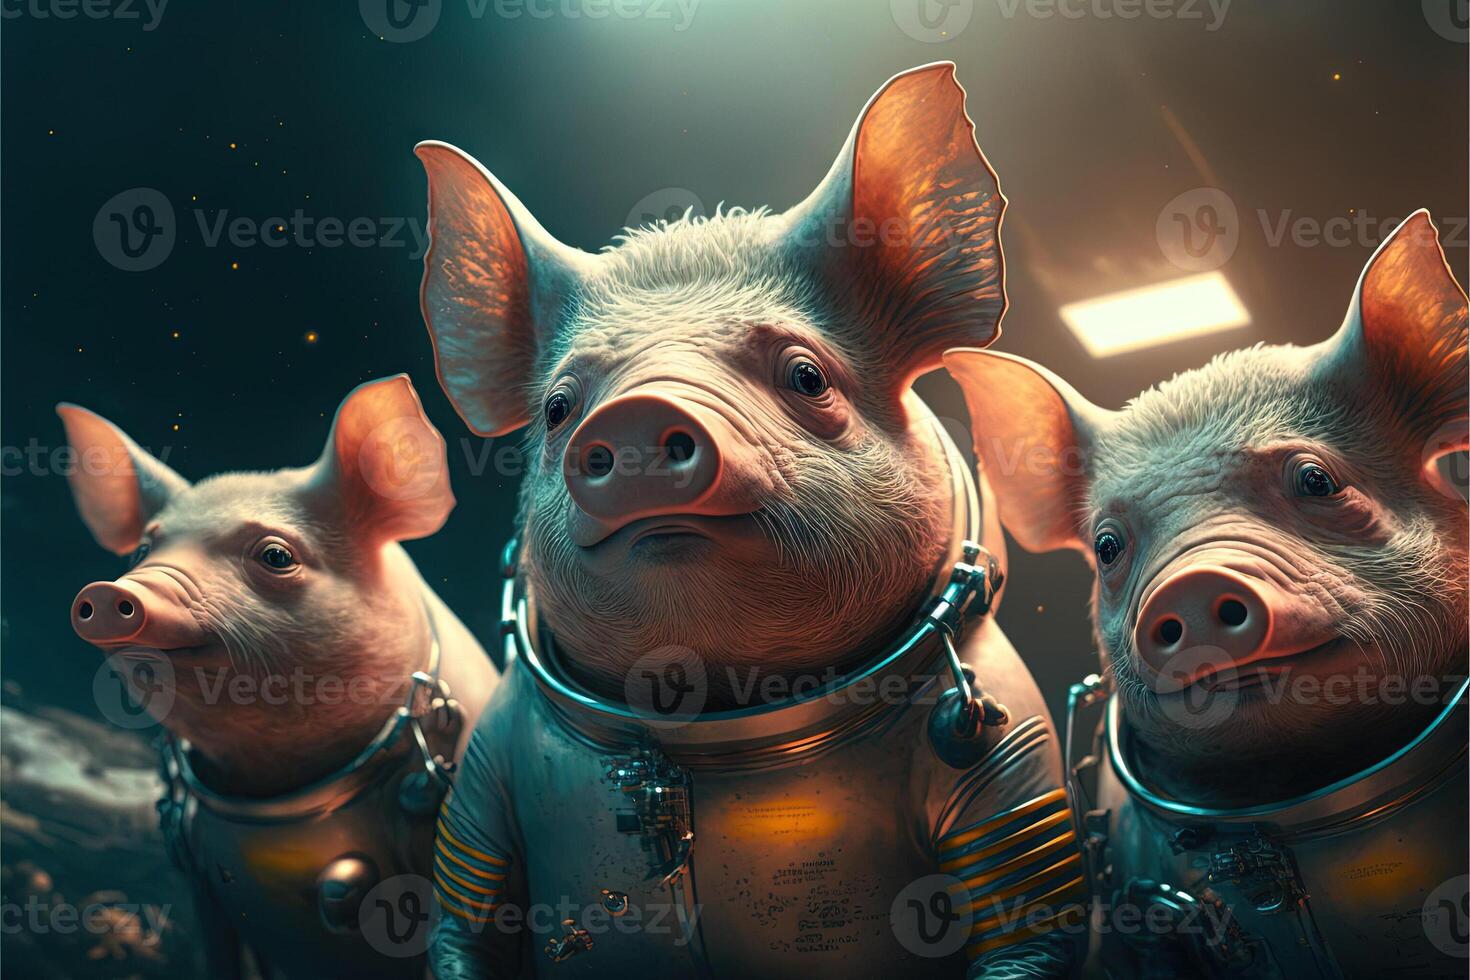 astonaut pigs in space illustration photo